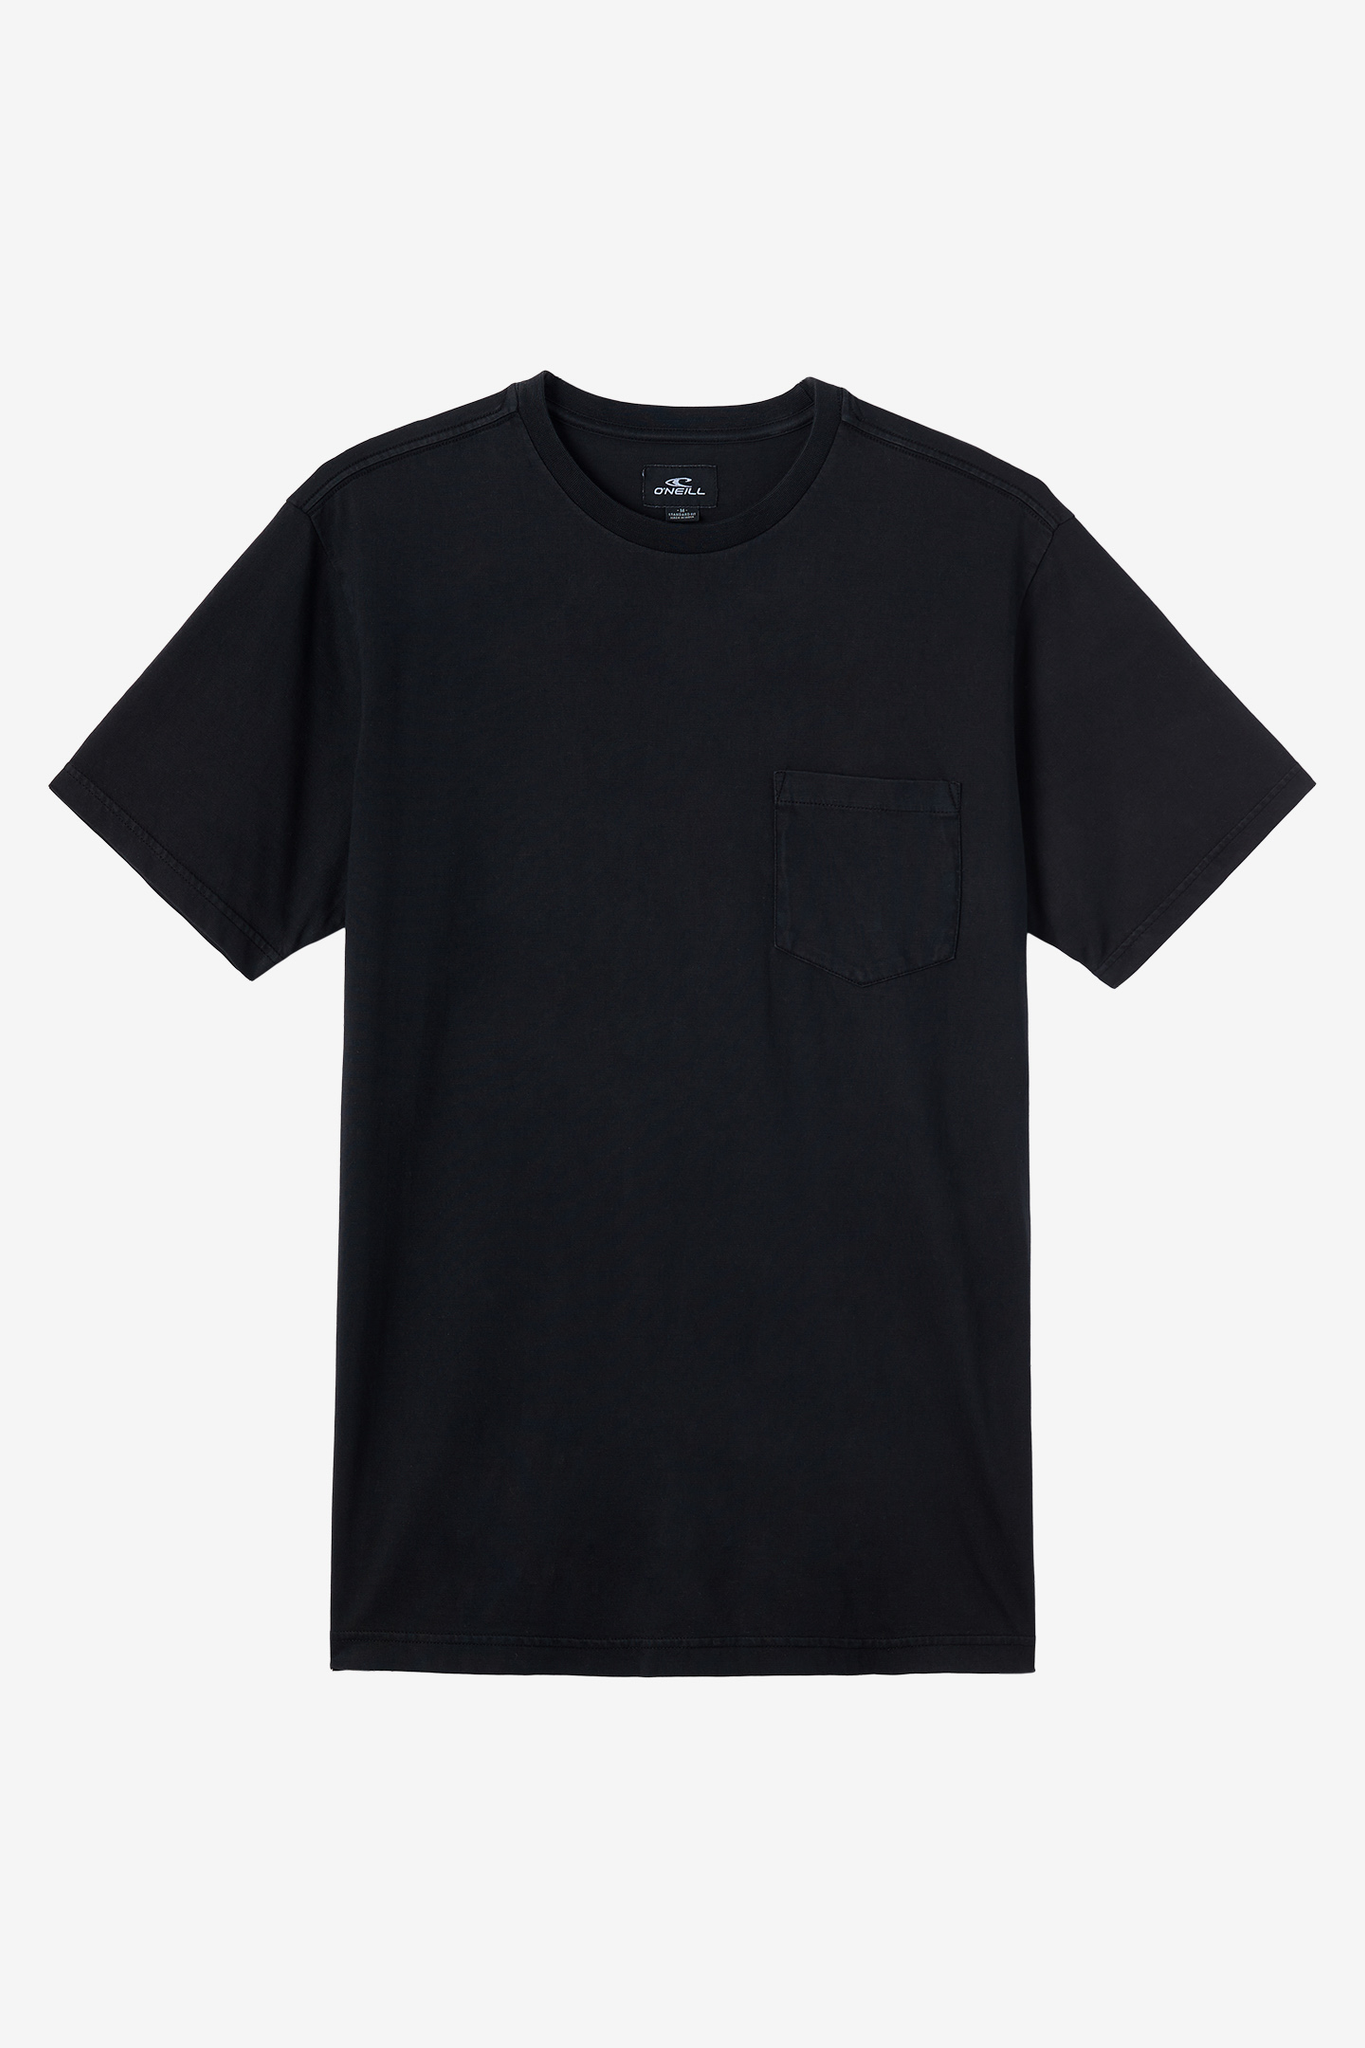 O'NEIL CASTING CLUB Fly Fishing Standard Fit T Shirt Mens XL Black Pocket  Cotton